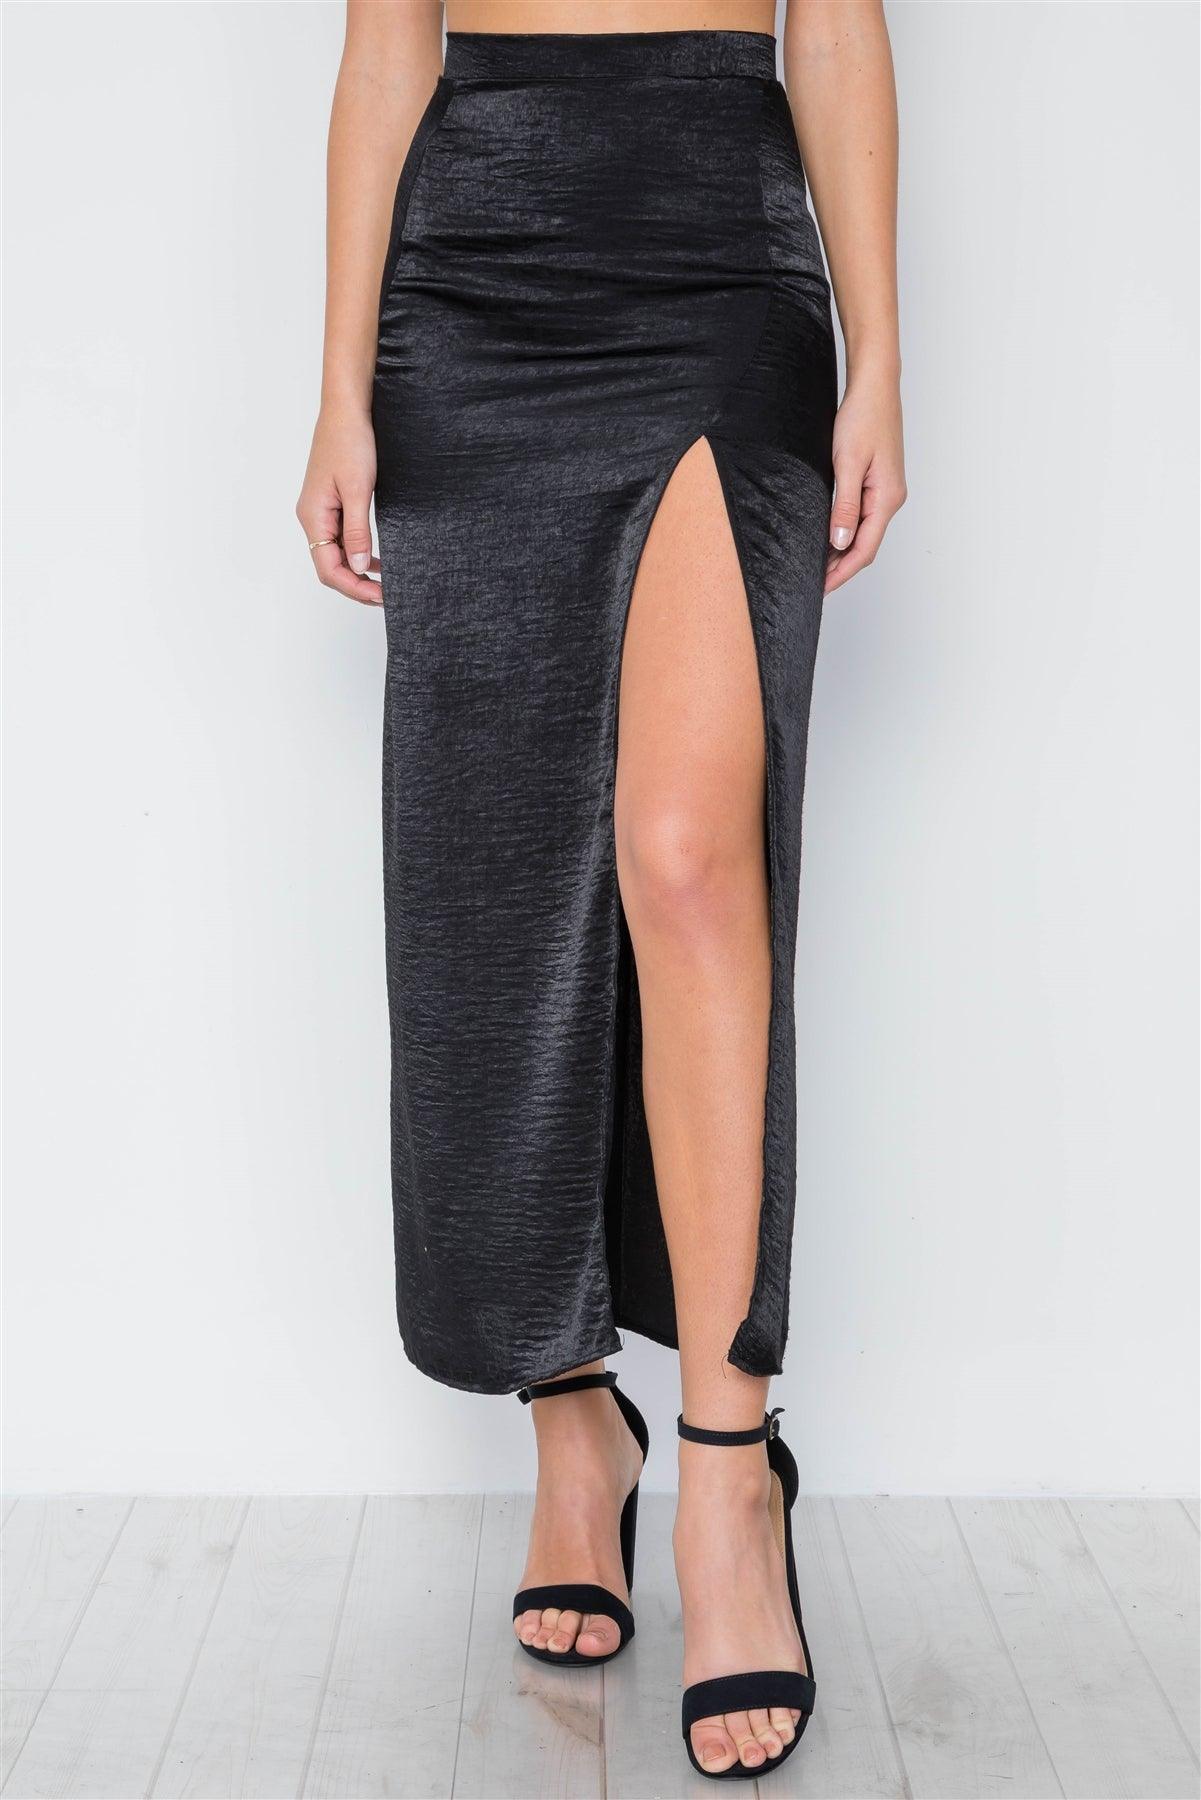 Black Bodycon Front Slit Maxi Skirt /3-2-1